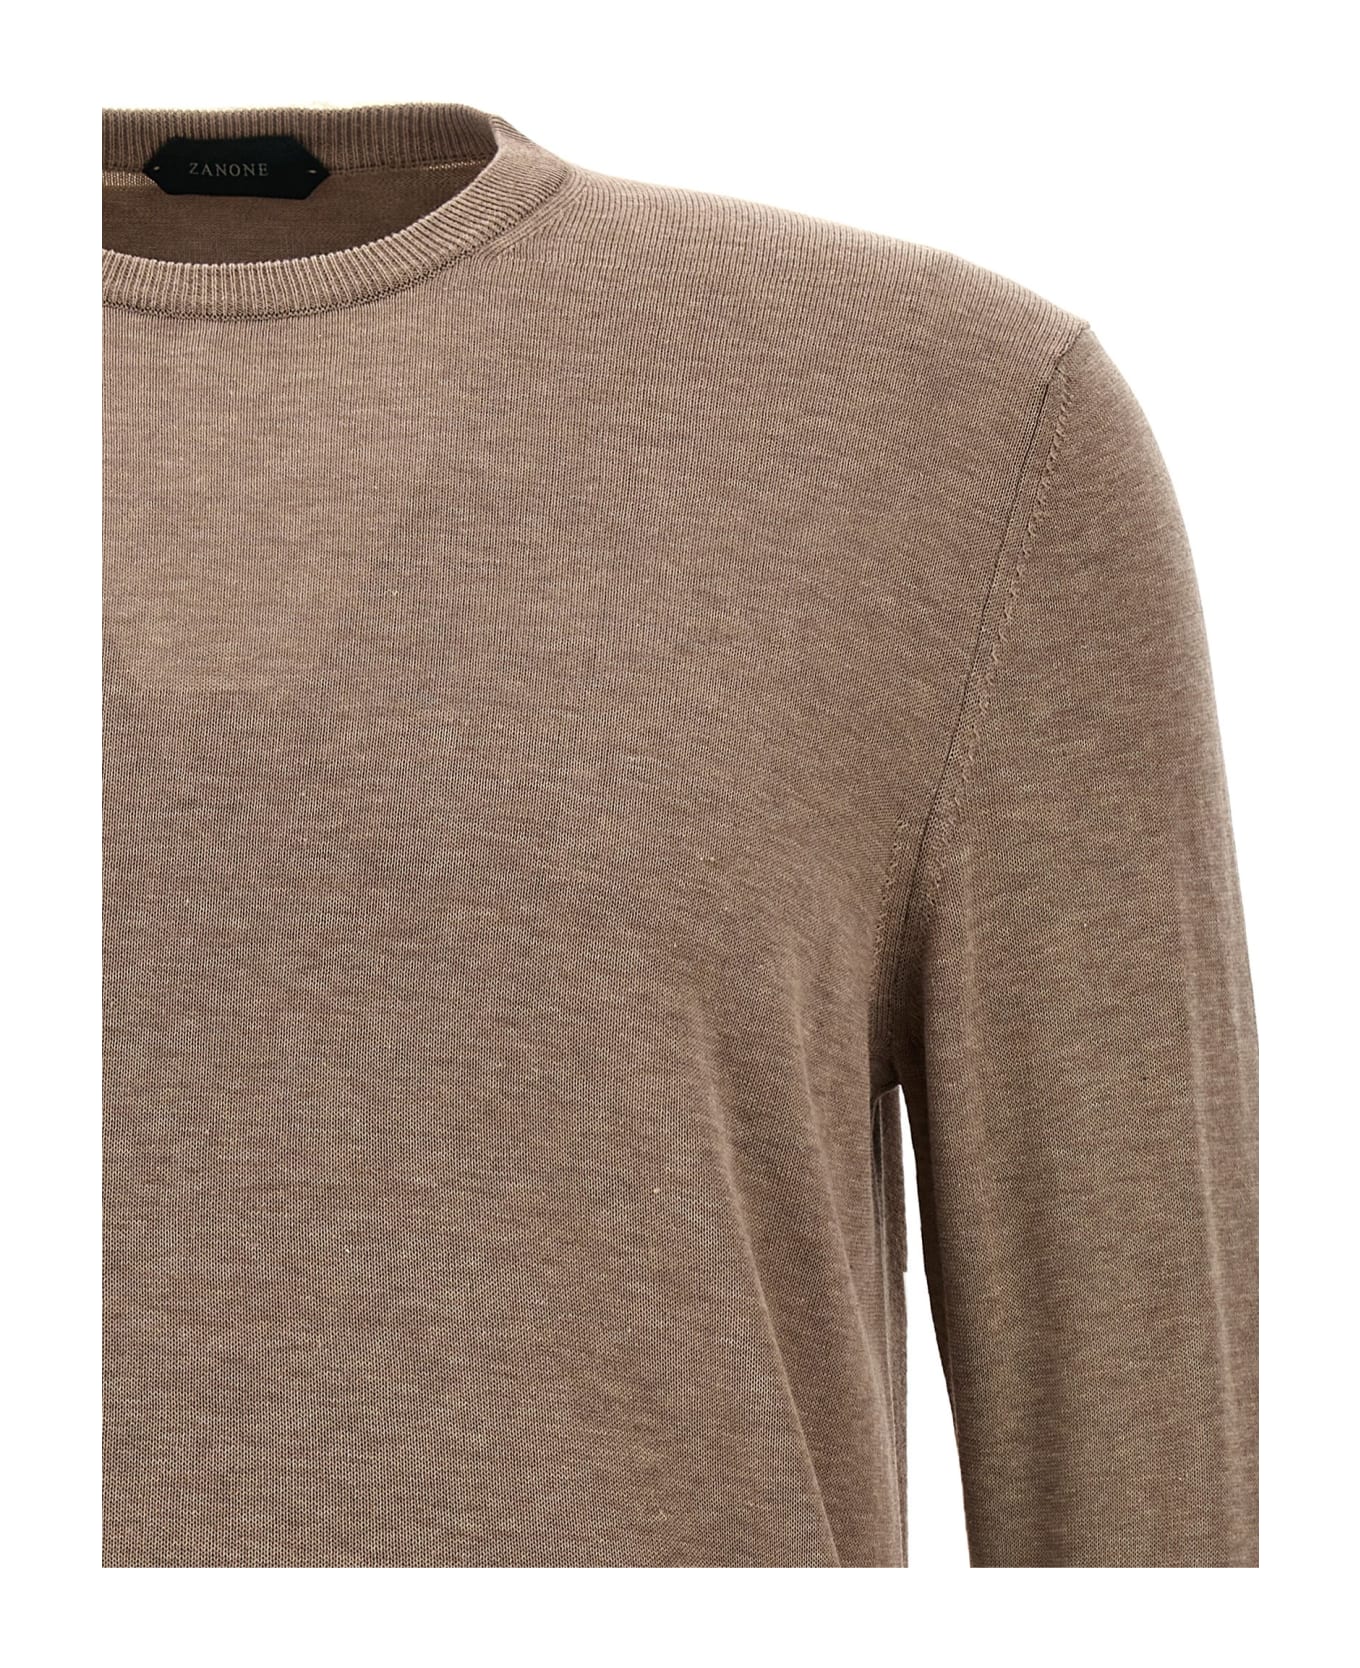 Zanone Cotton Crepe Sweater ニットウェア